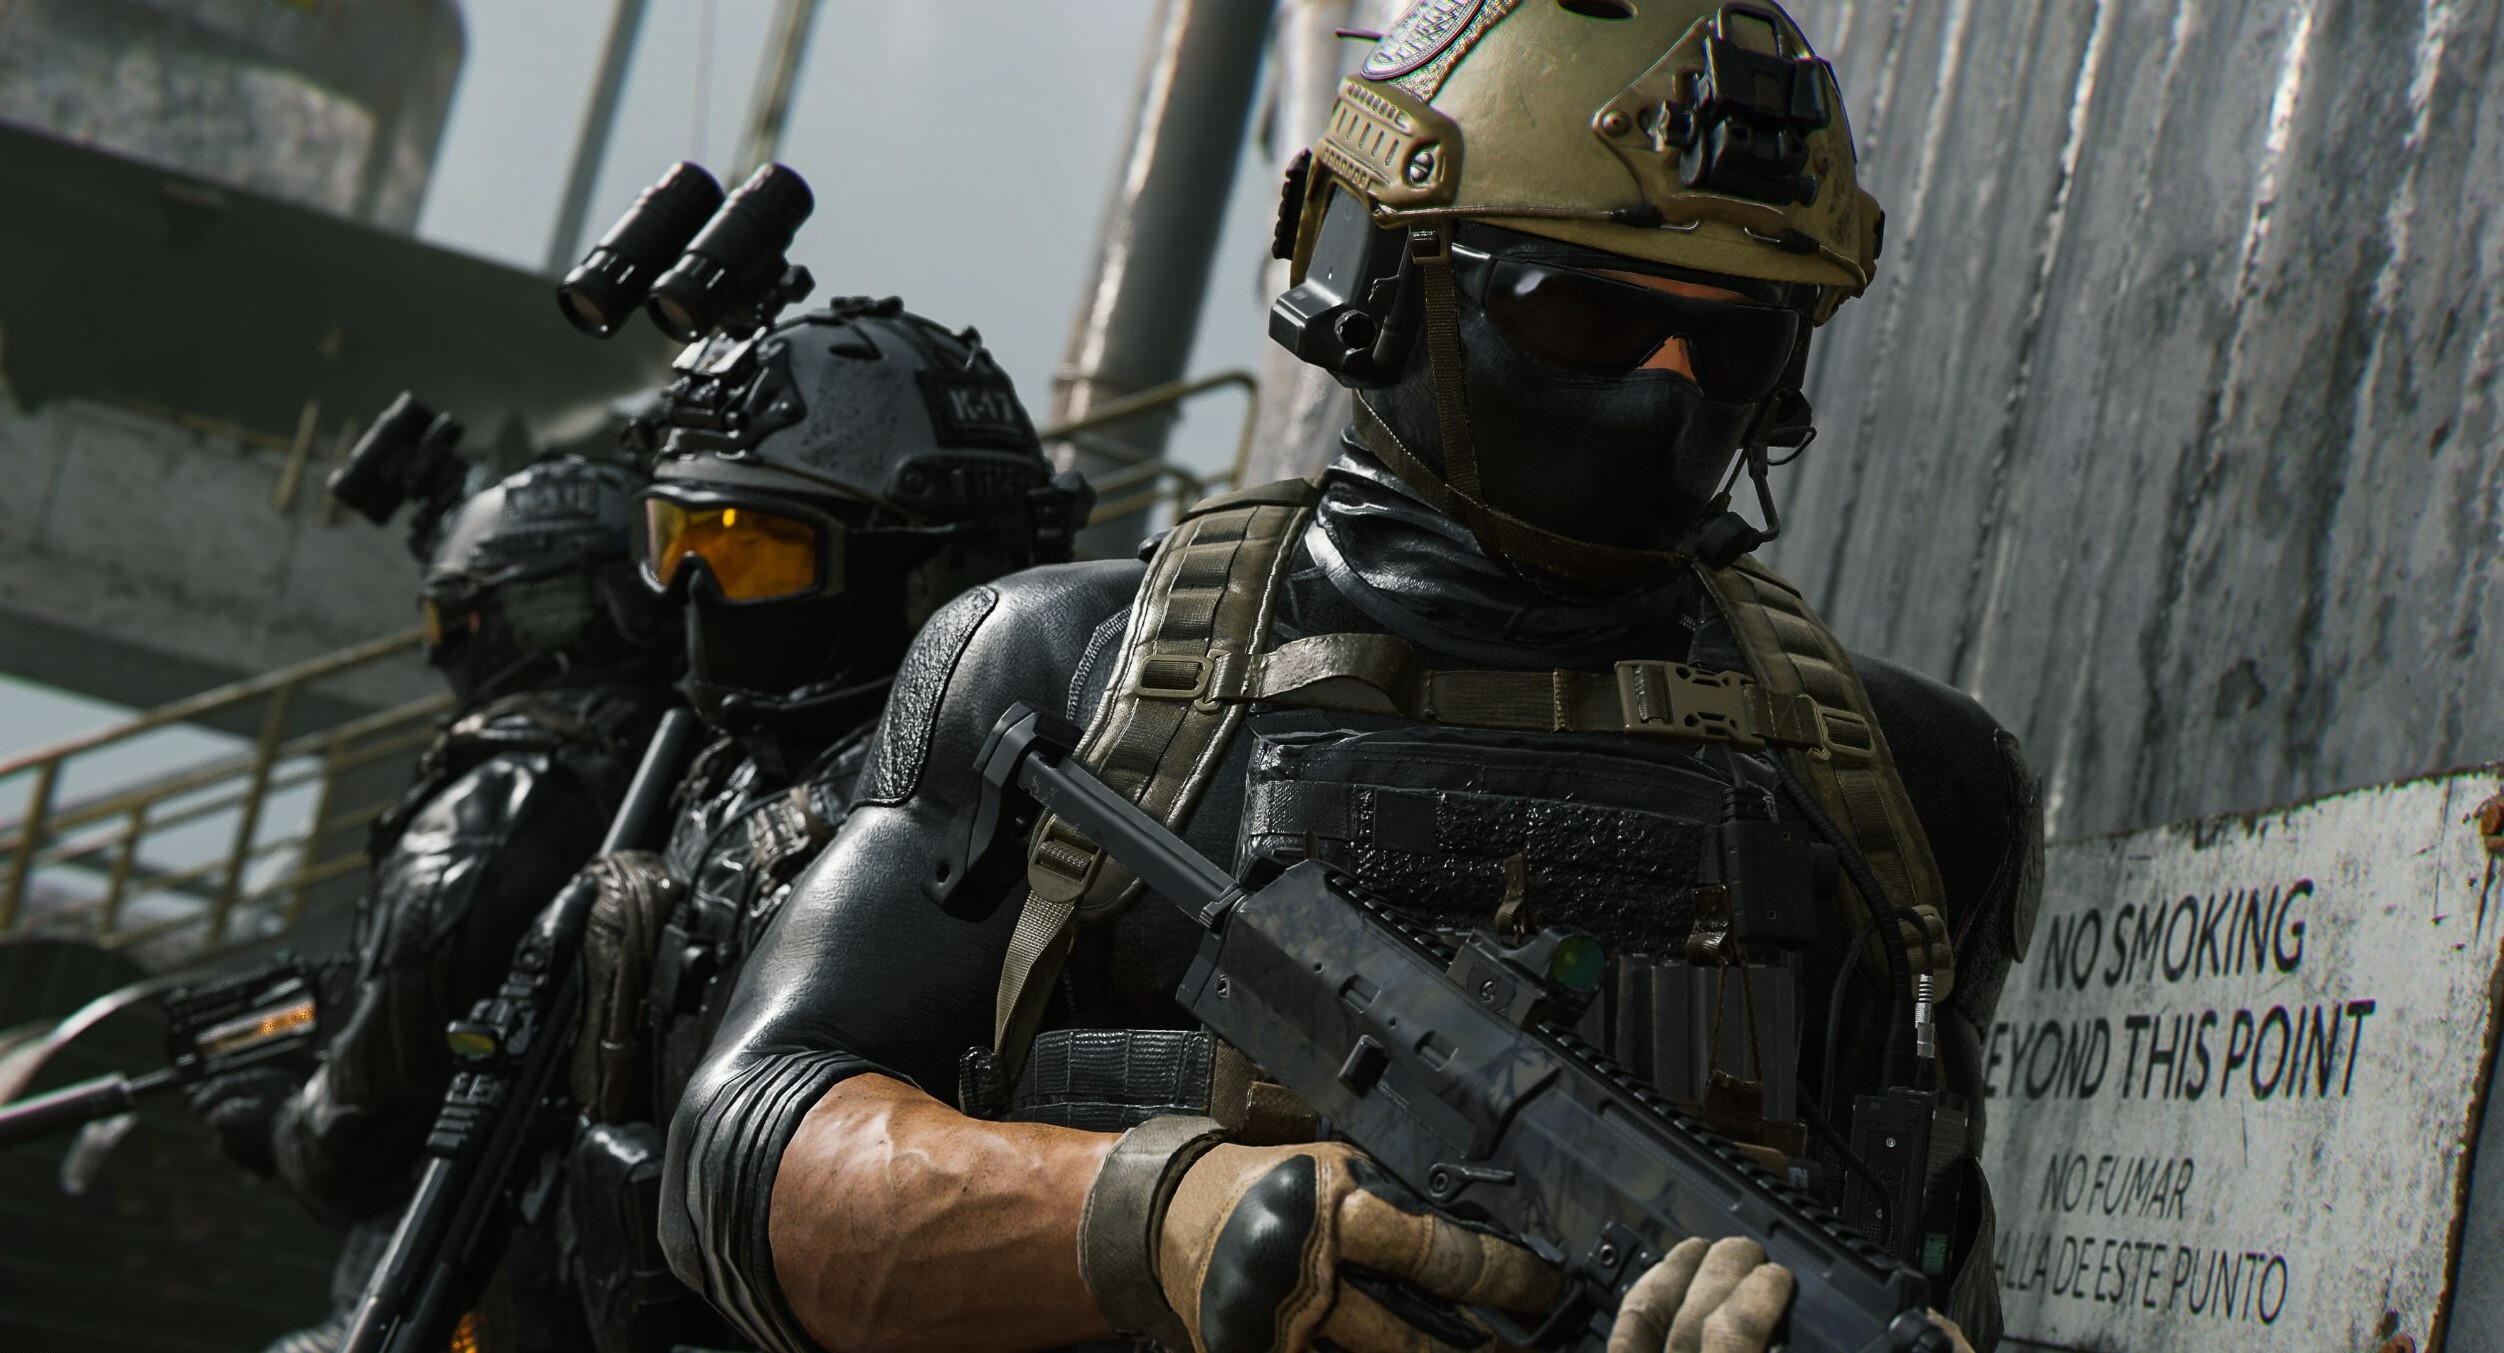 Call of Duty: Modern Warfare With MW2 HUD Is A Big Improvement